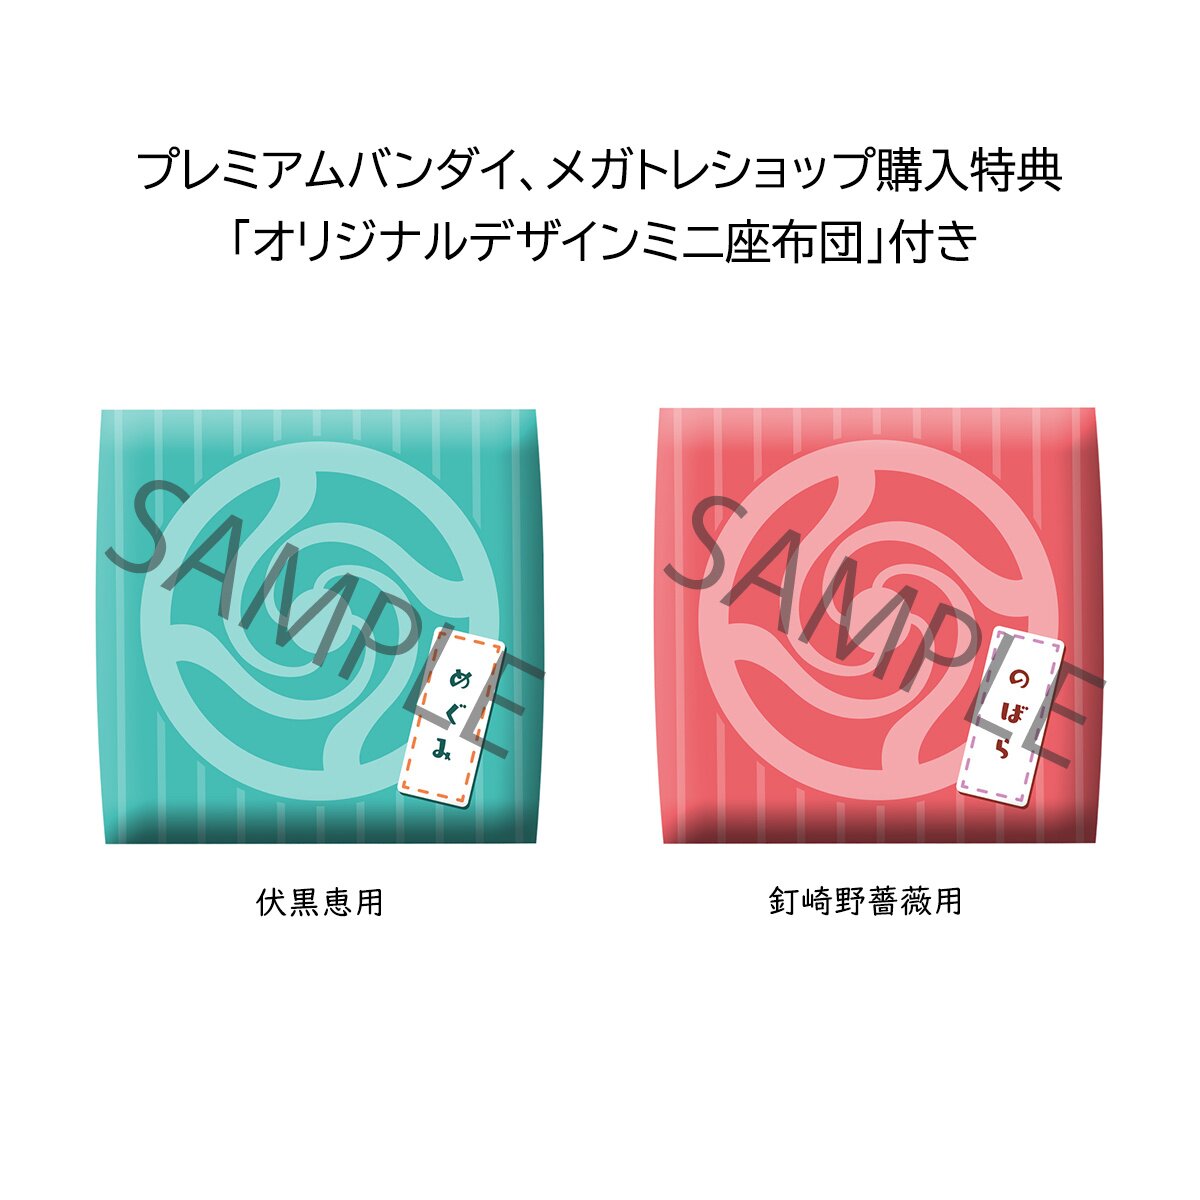 Jujutsu Kaisen Merchandise - Face Masks, Socks, Mirror and Tissues from  Shimamura - Product Reviews - Hana's Blog